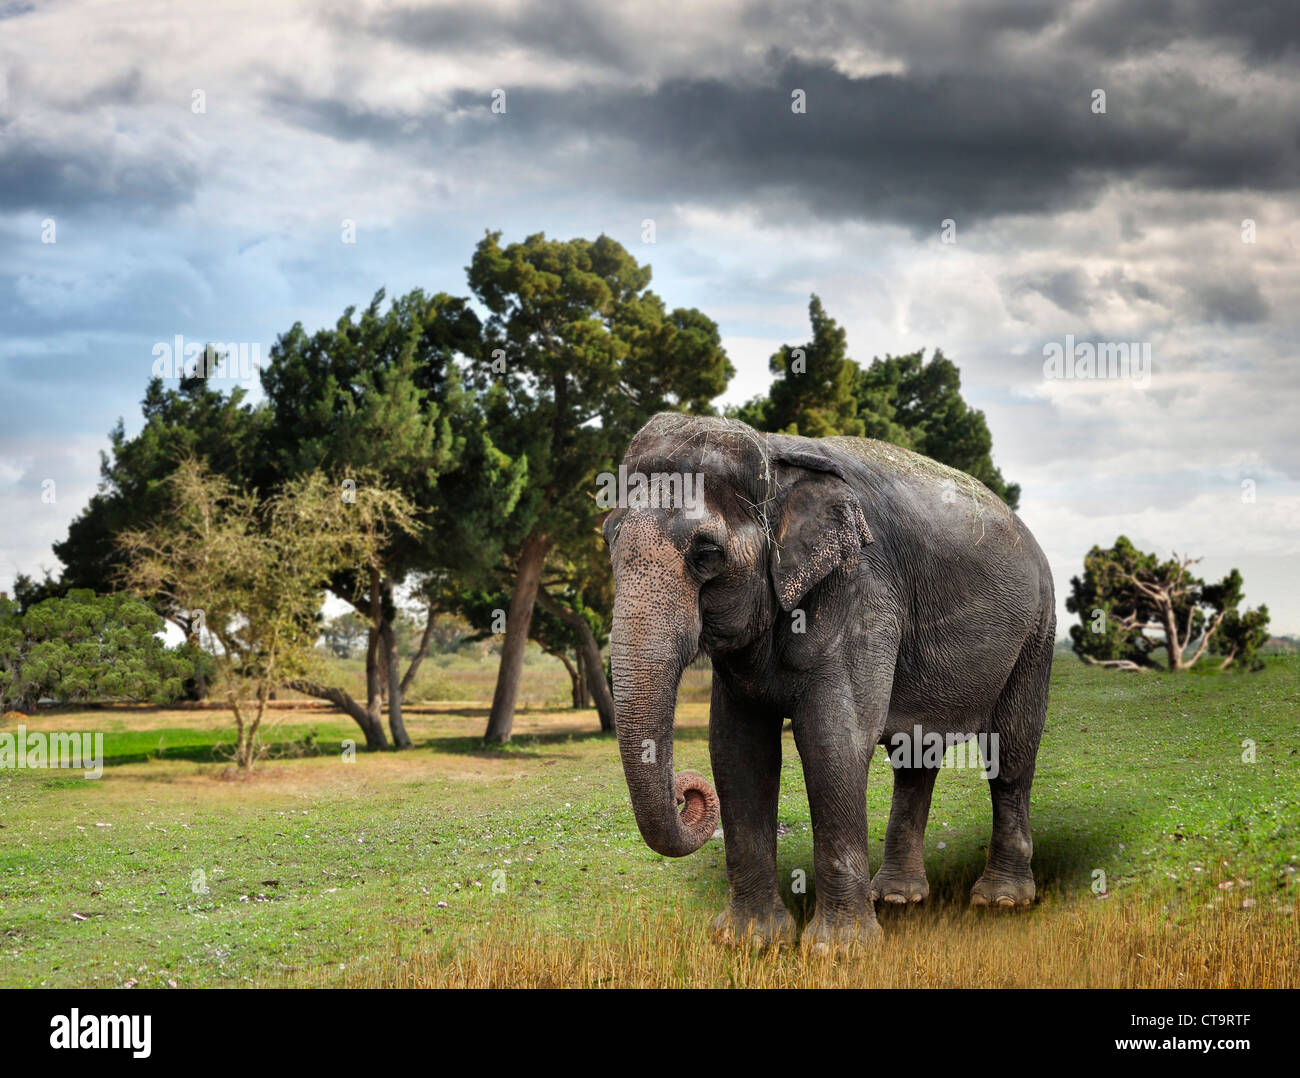 Asian Elephant Walking On Grass Stock Photo